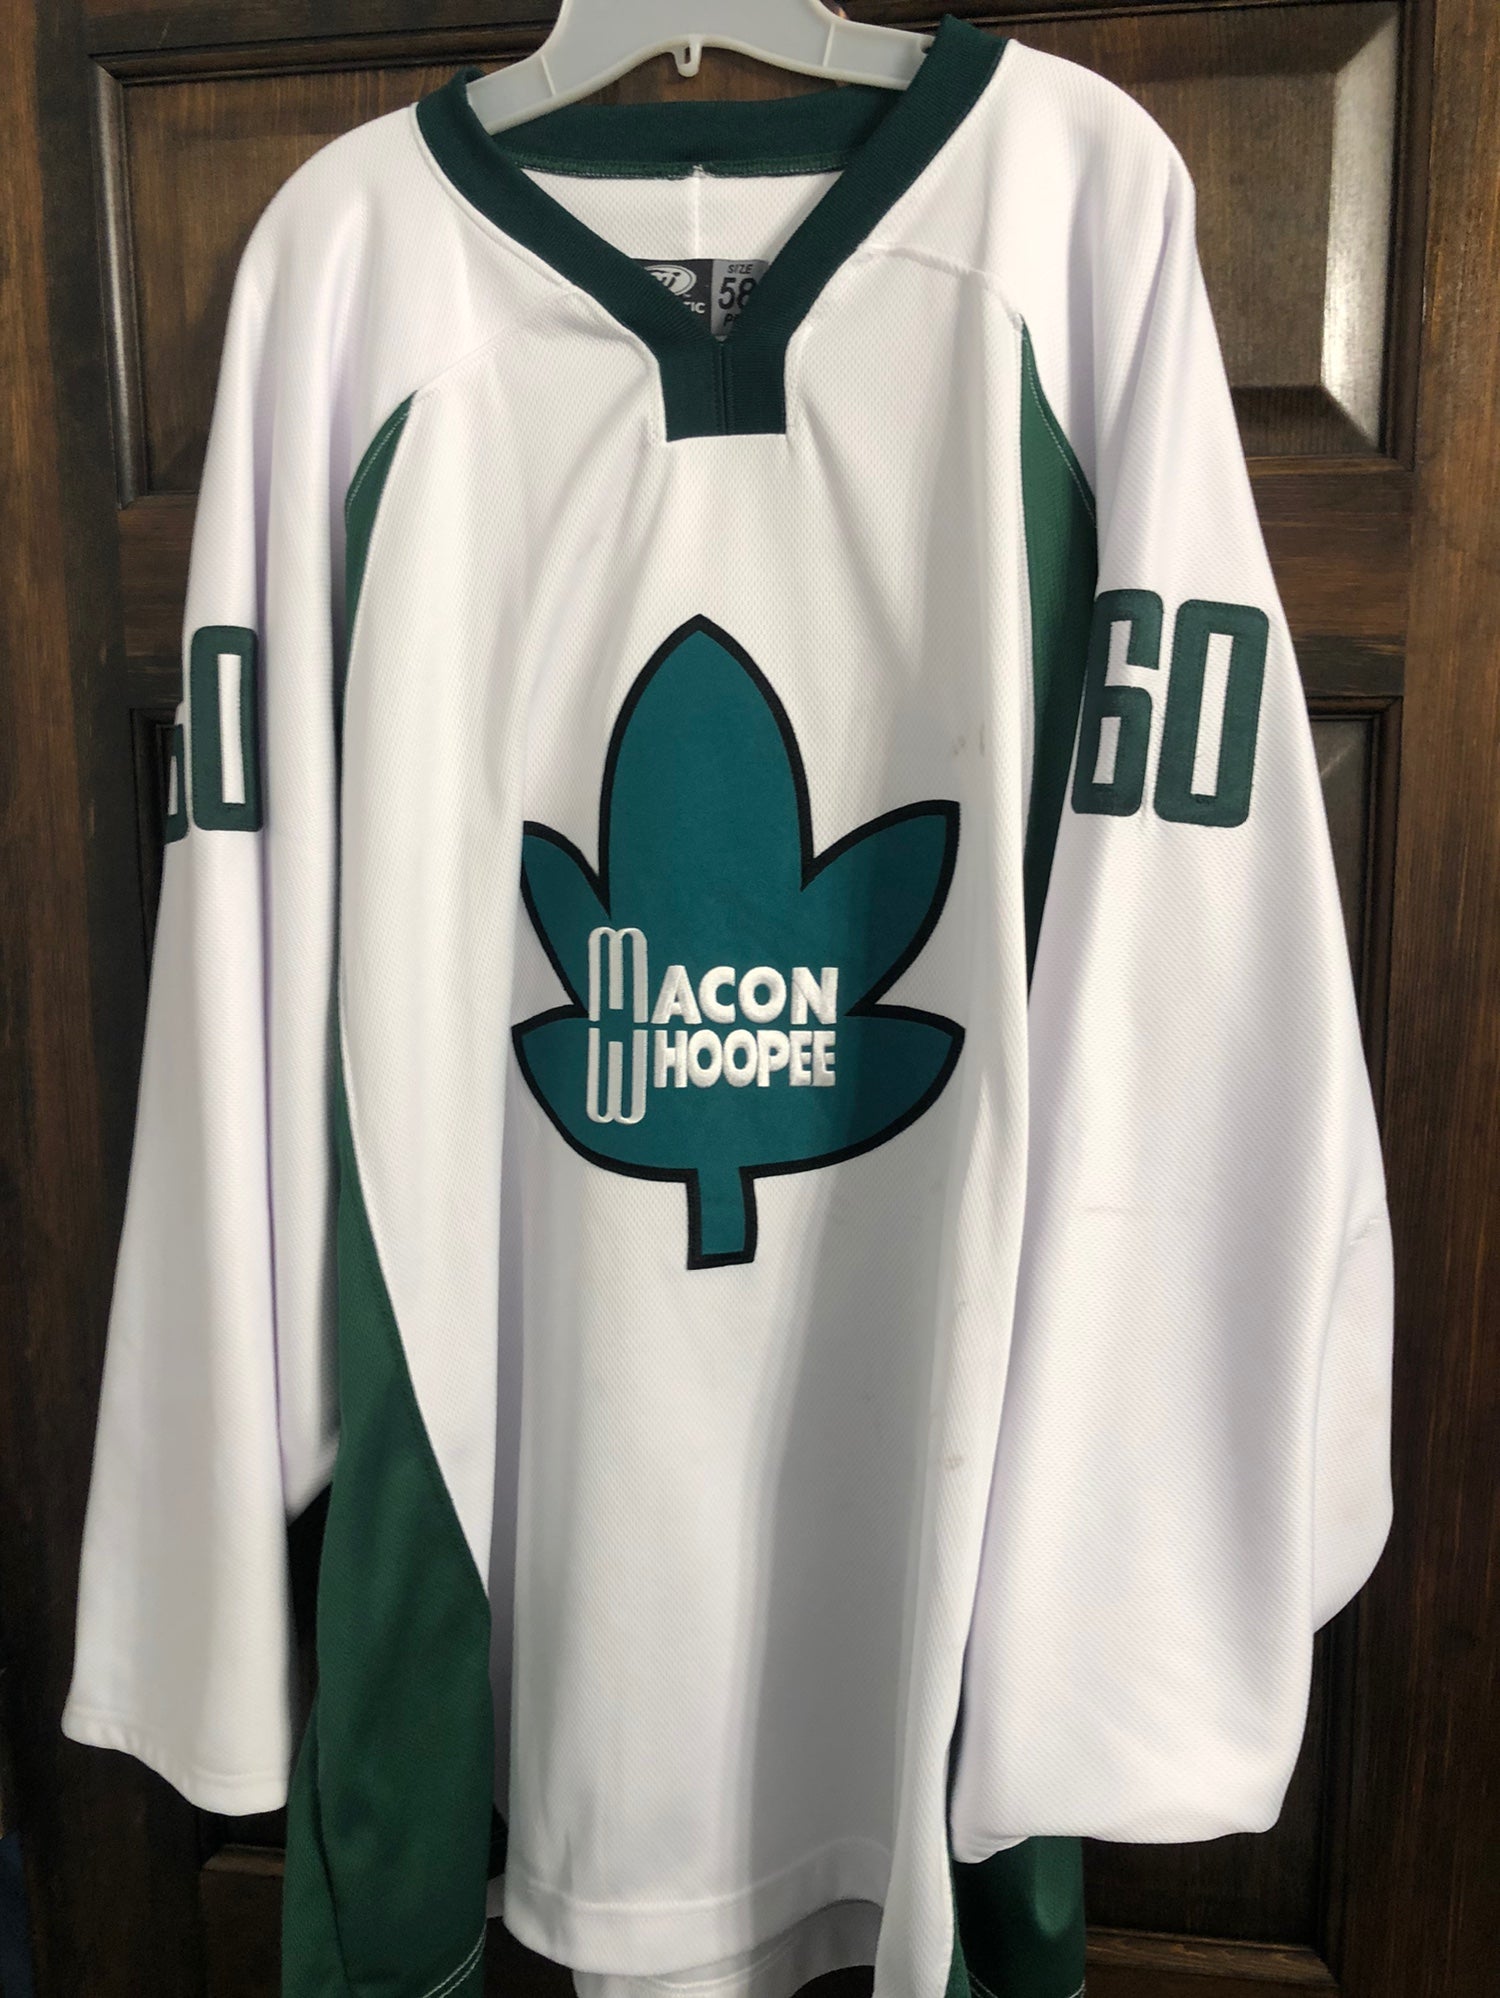 Anybody down for Macon Whoopee? : r/hockeyjerseys